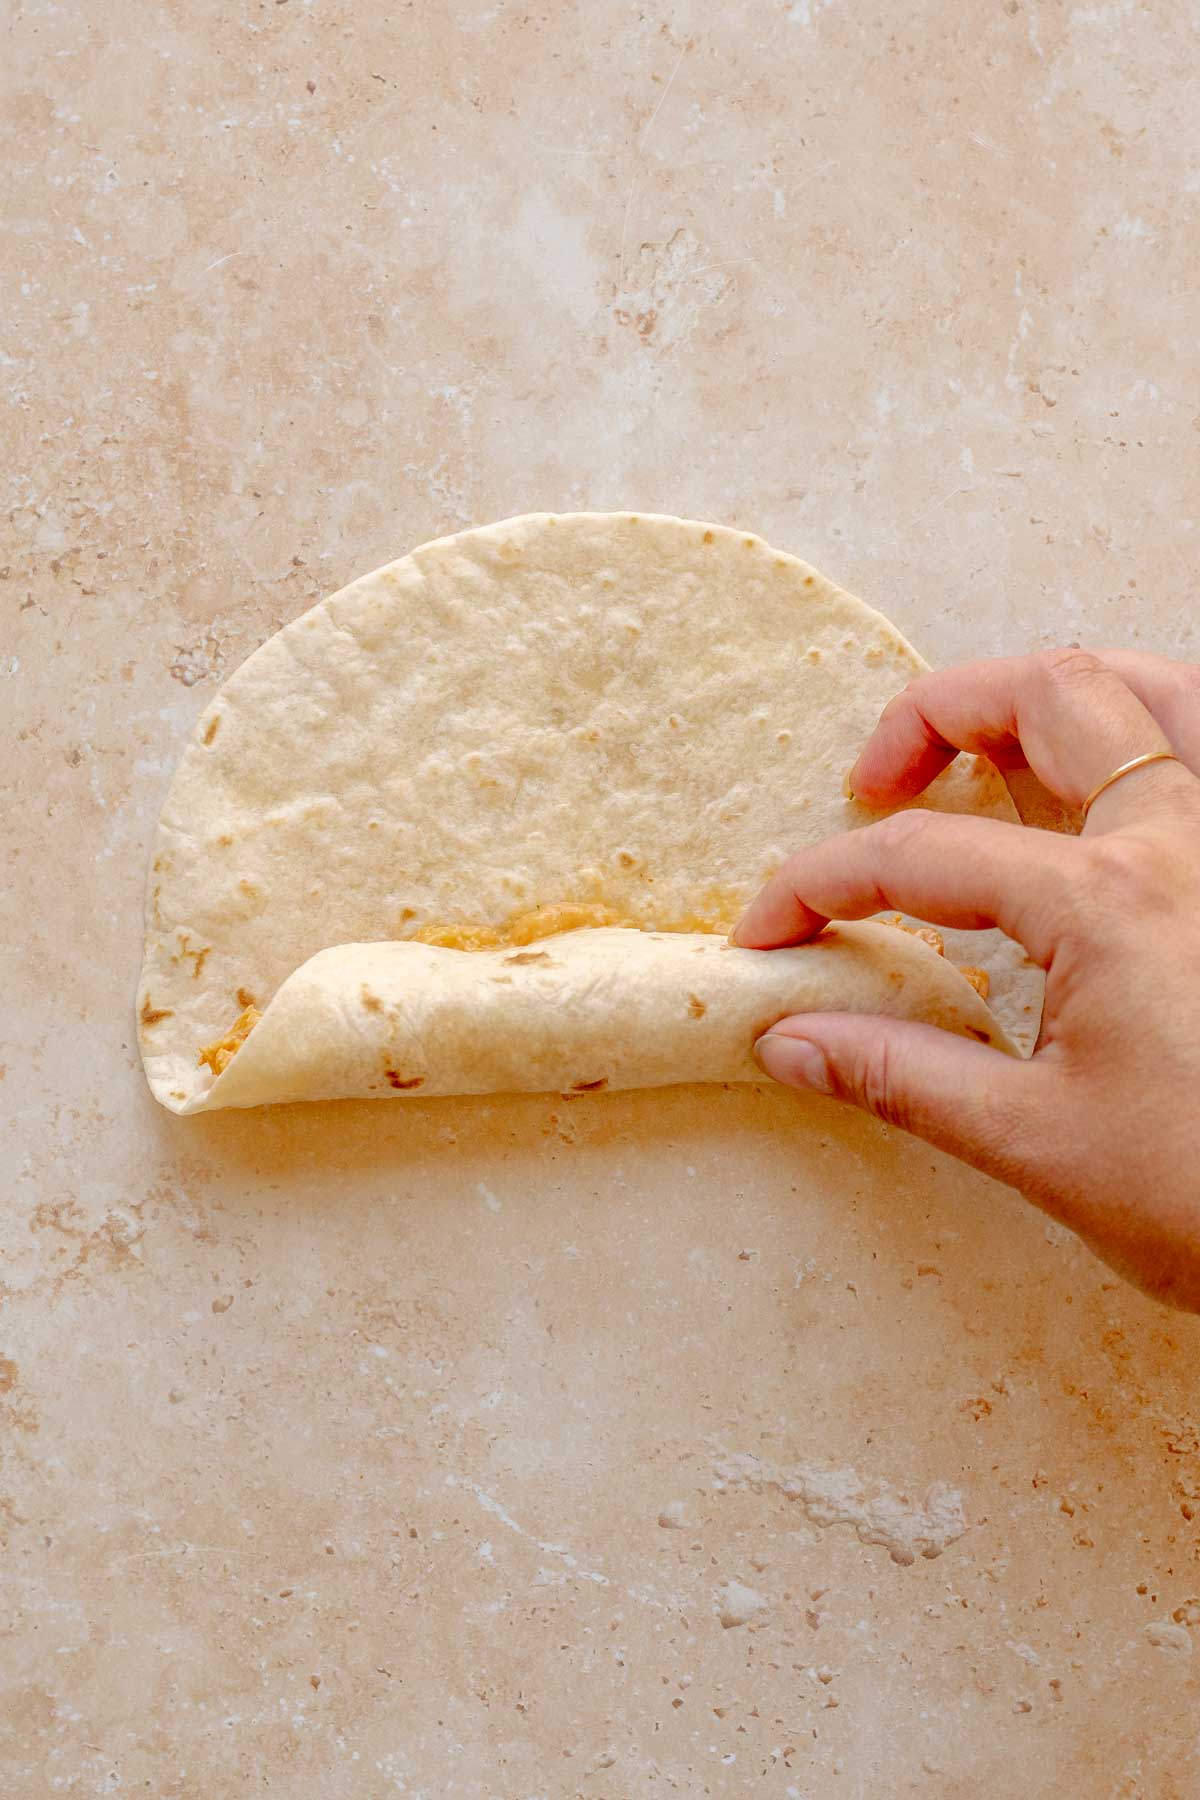 A hand rolls up a tortilla like a cigarette.